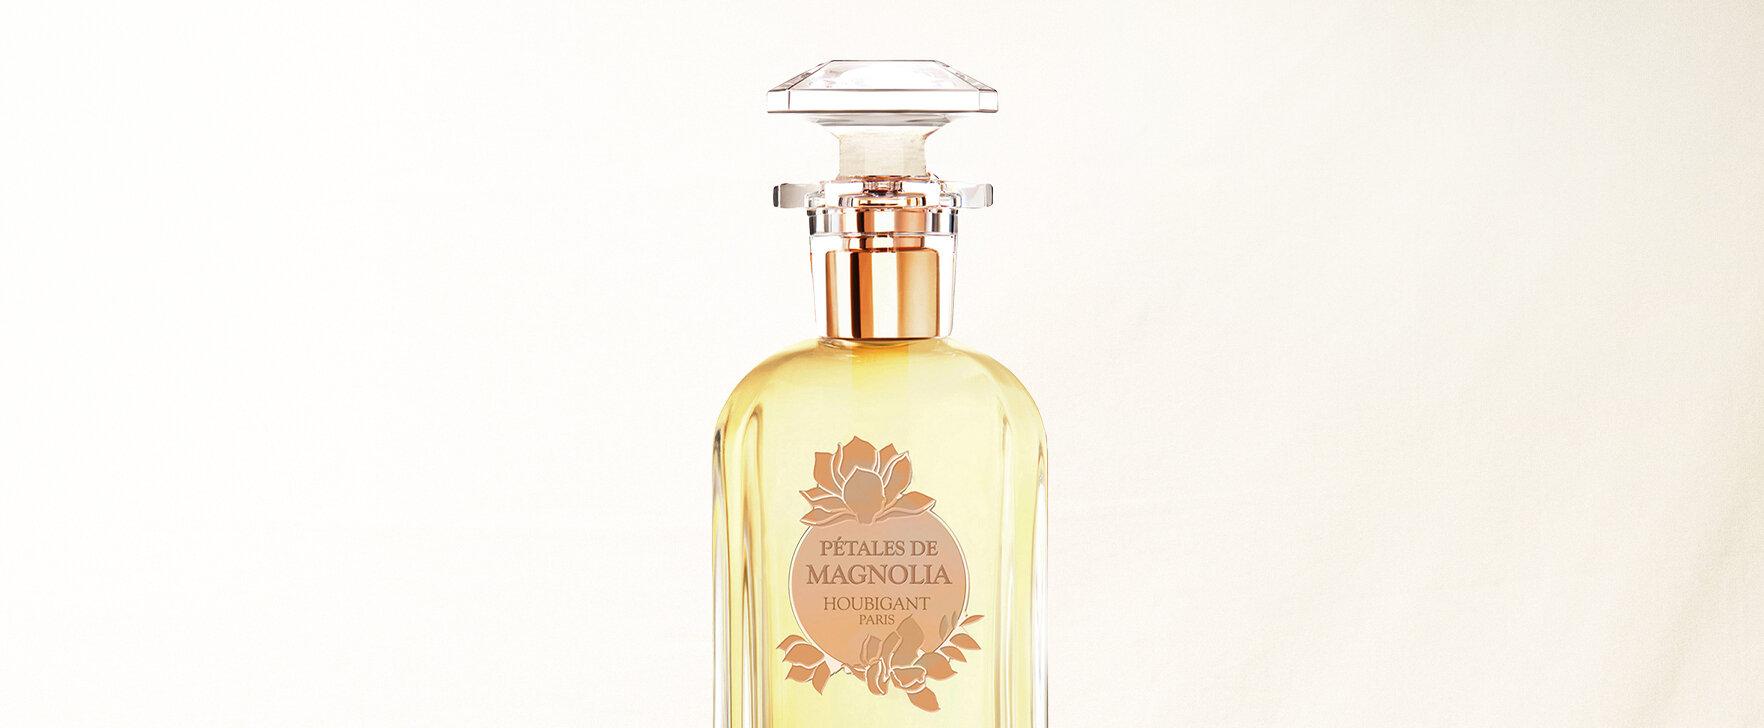 An Ode to the Beginning of Spring: The New Eau de Parfum "Pétales de Magnolia" by Houbigant